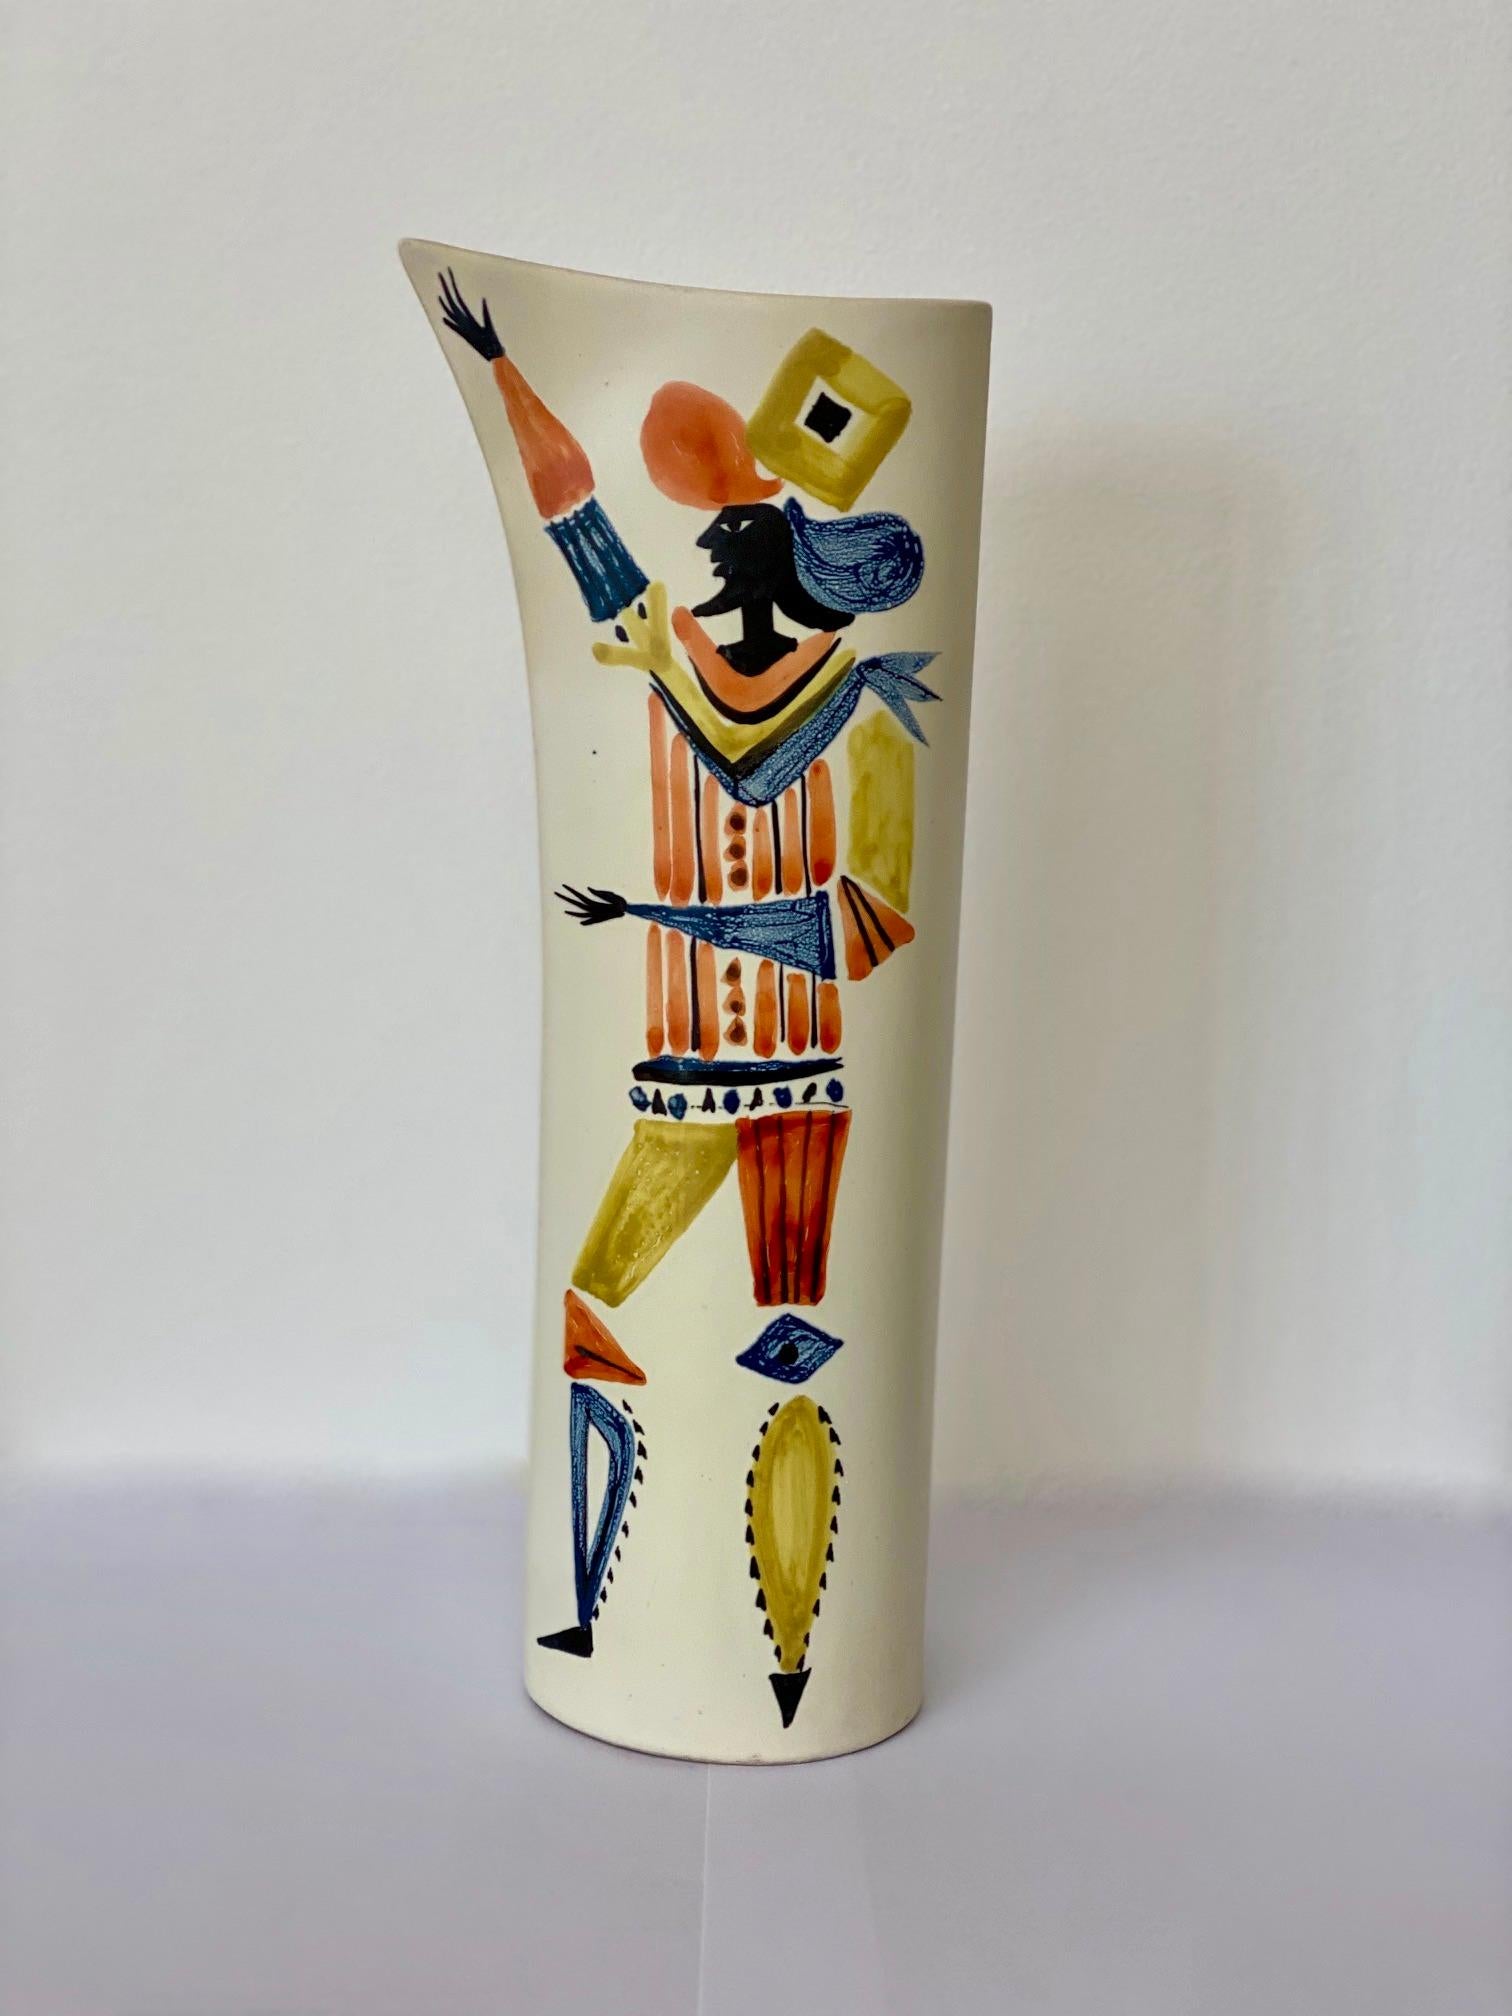 Roger Capron (1922-2006)
Stilisierte Vase mit Figur signiert Capron Vallauris
Maße: H 31 cm x L 12 cm.